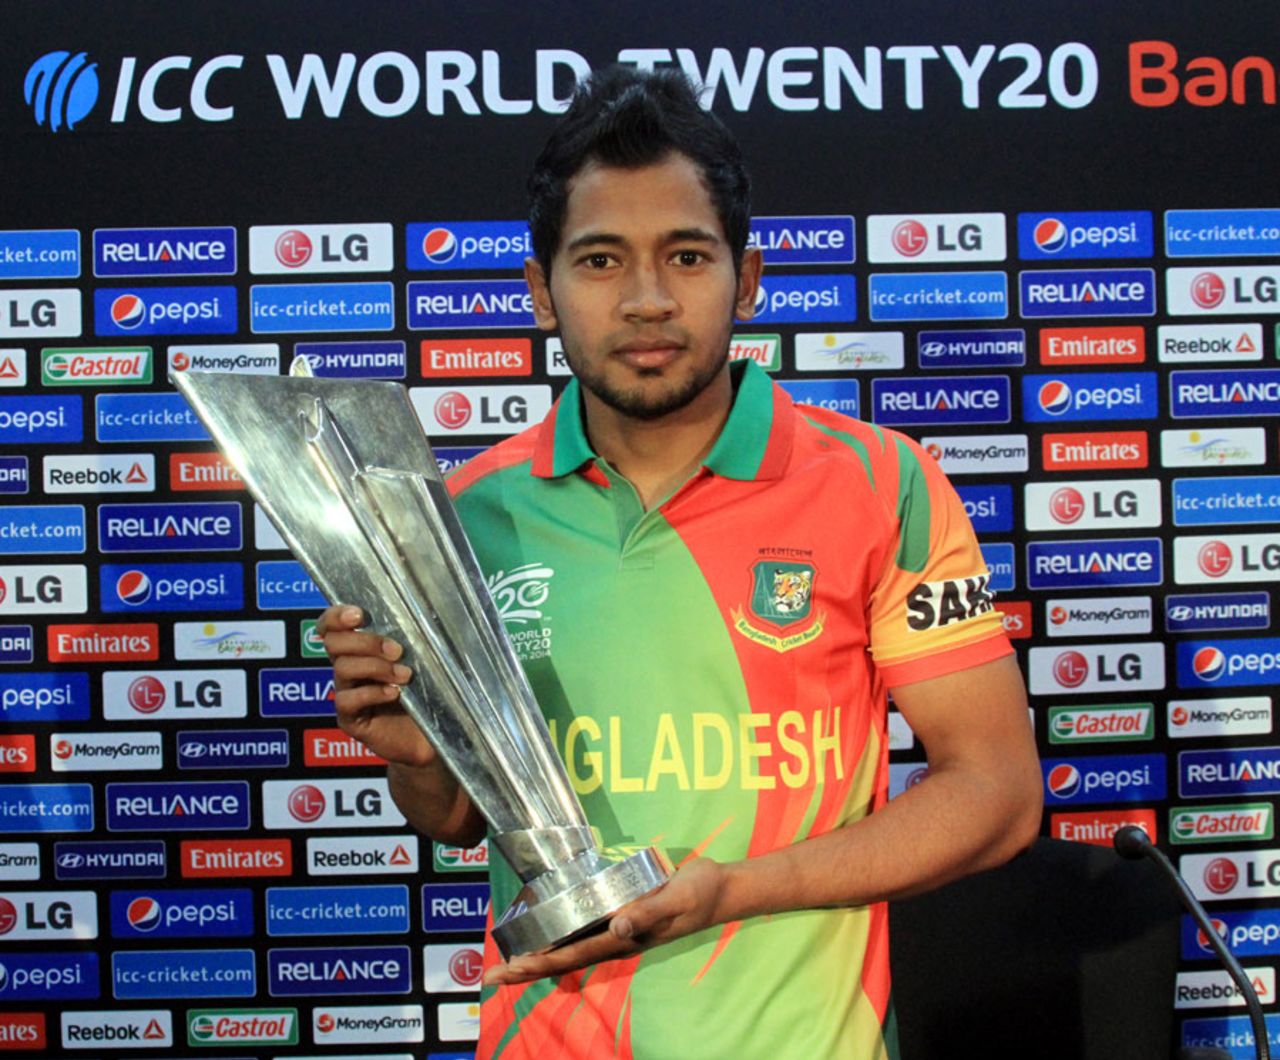 Mushfiqur Rahim with the World T20 trophy, Dhaka, March 9, 2014